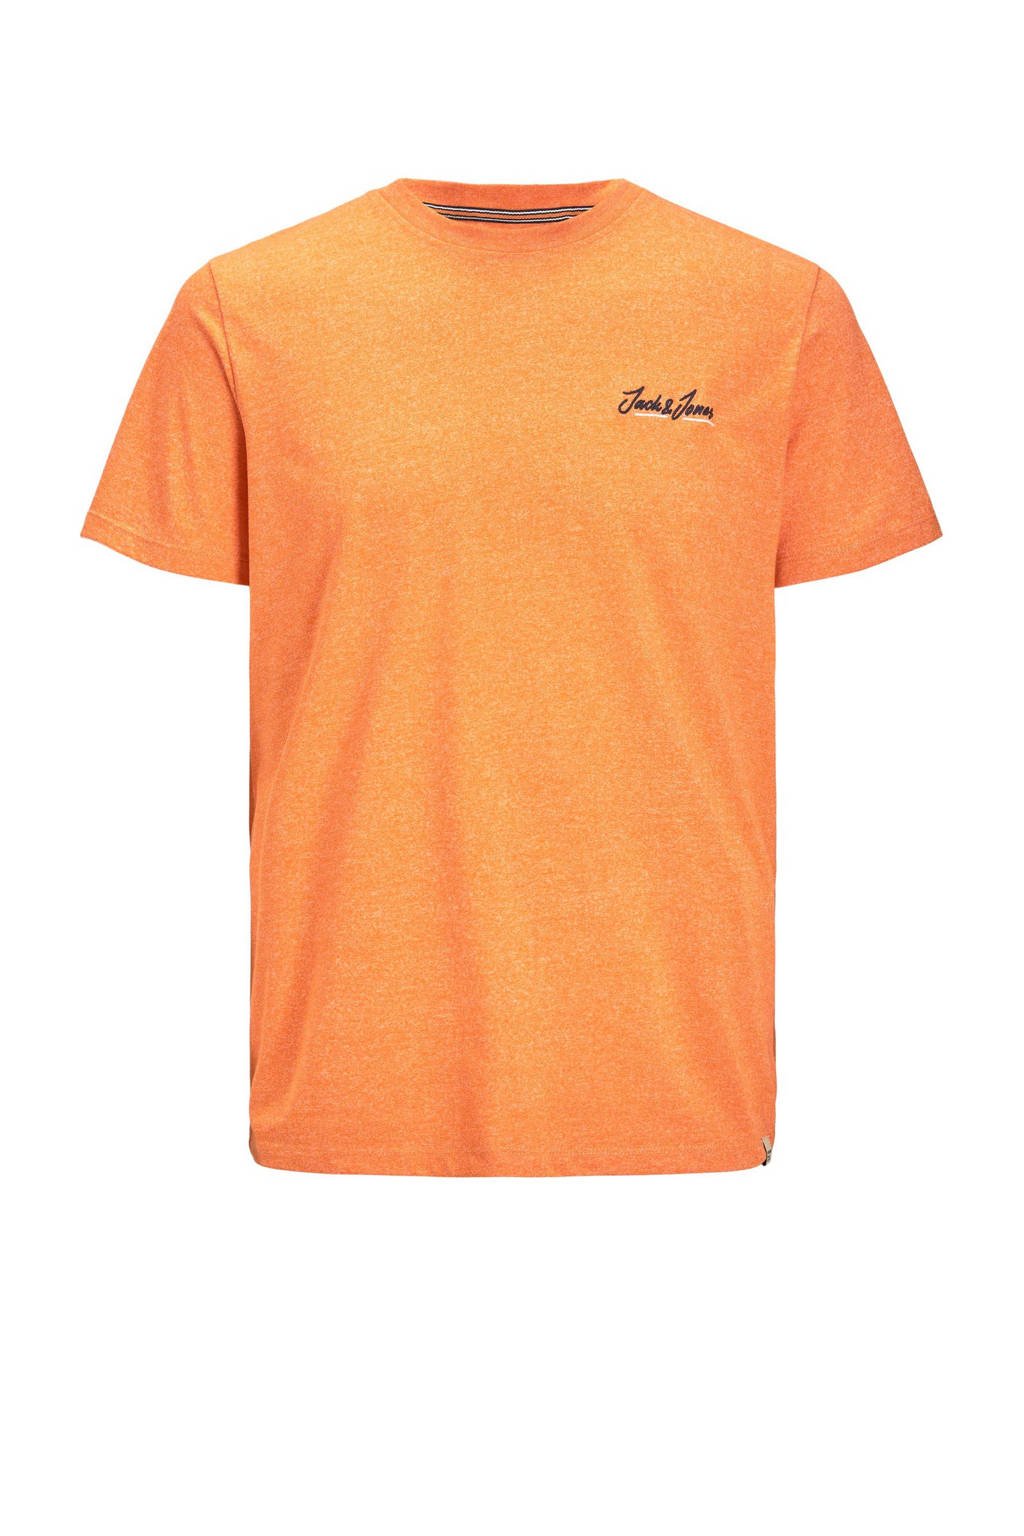 JACK & JONES ORIGINALS regular fit T-shirt JORTONS sun orange